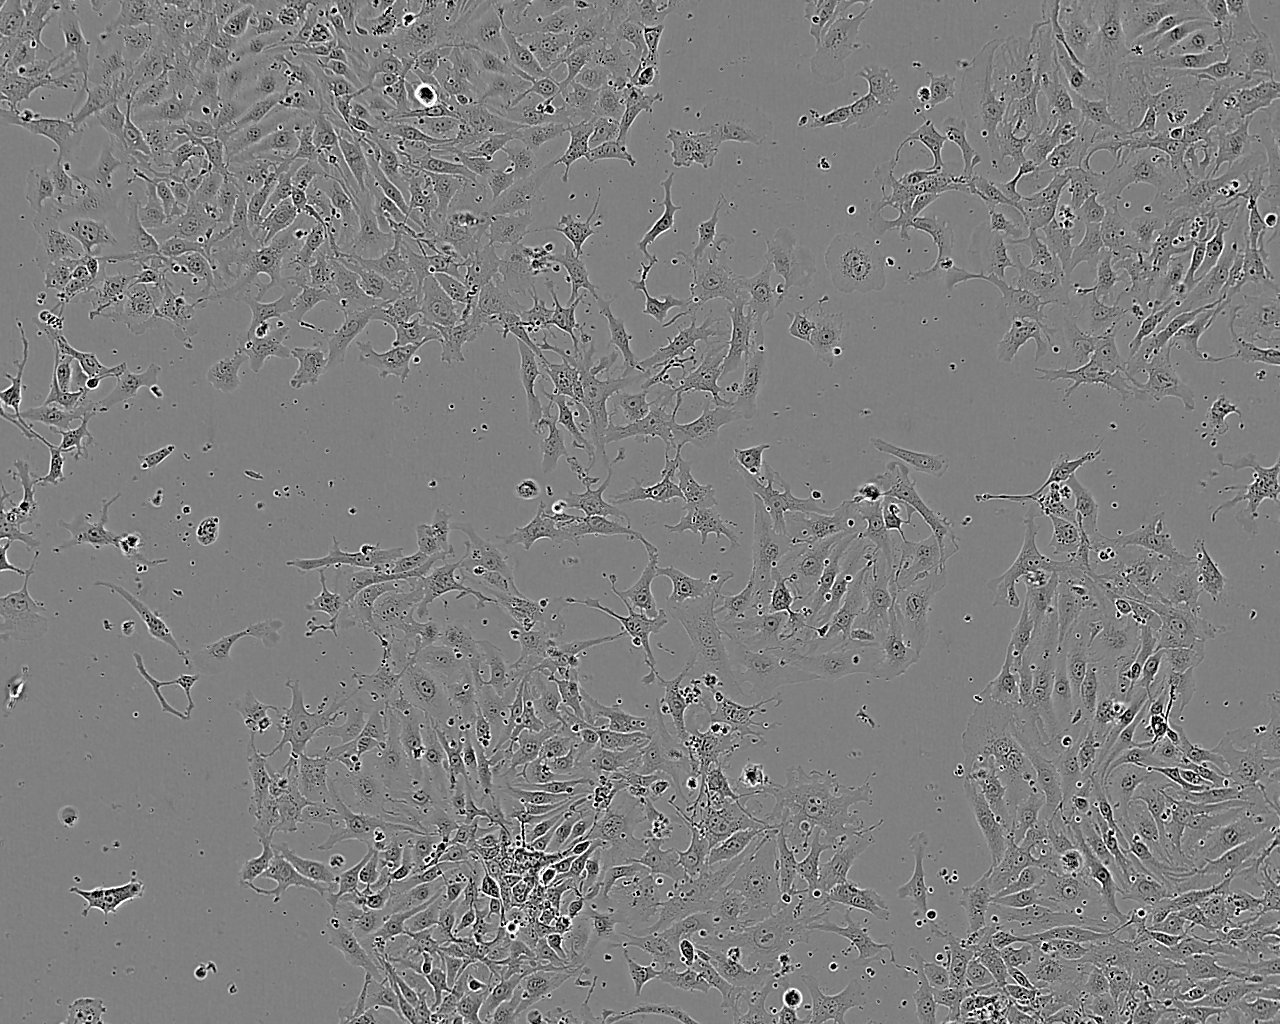 COV434 epithelioid cells人卵巢颗粒肿瘤细胞系,COV434 epithelioid cells